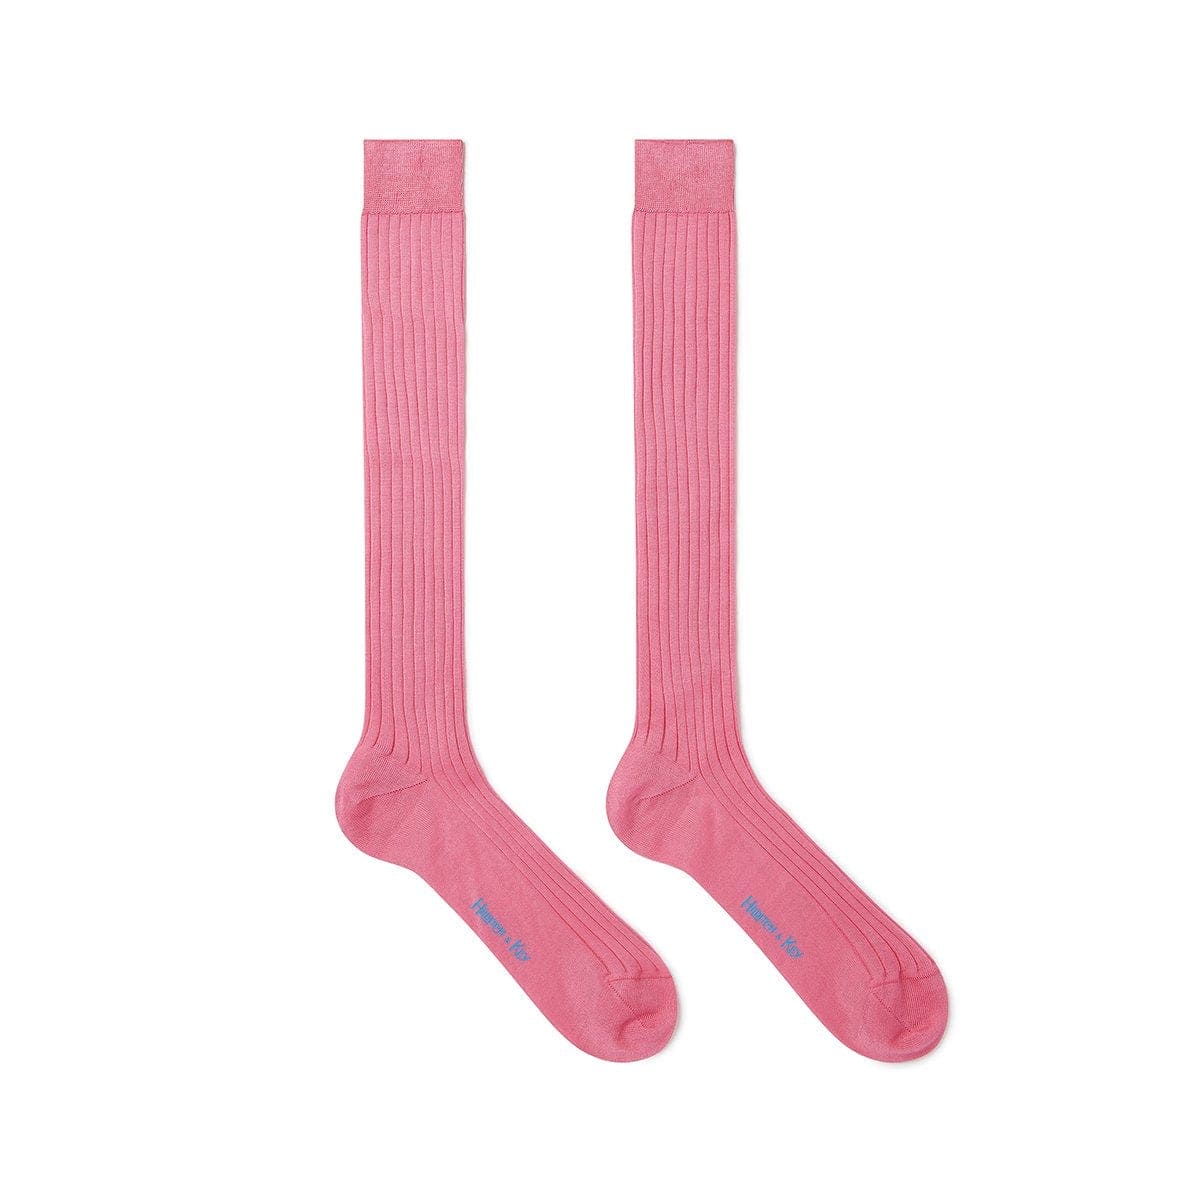 Long Plain Pink Cotton Socks